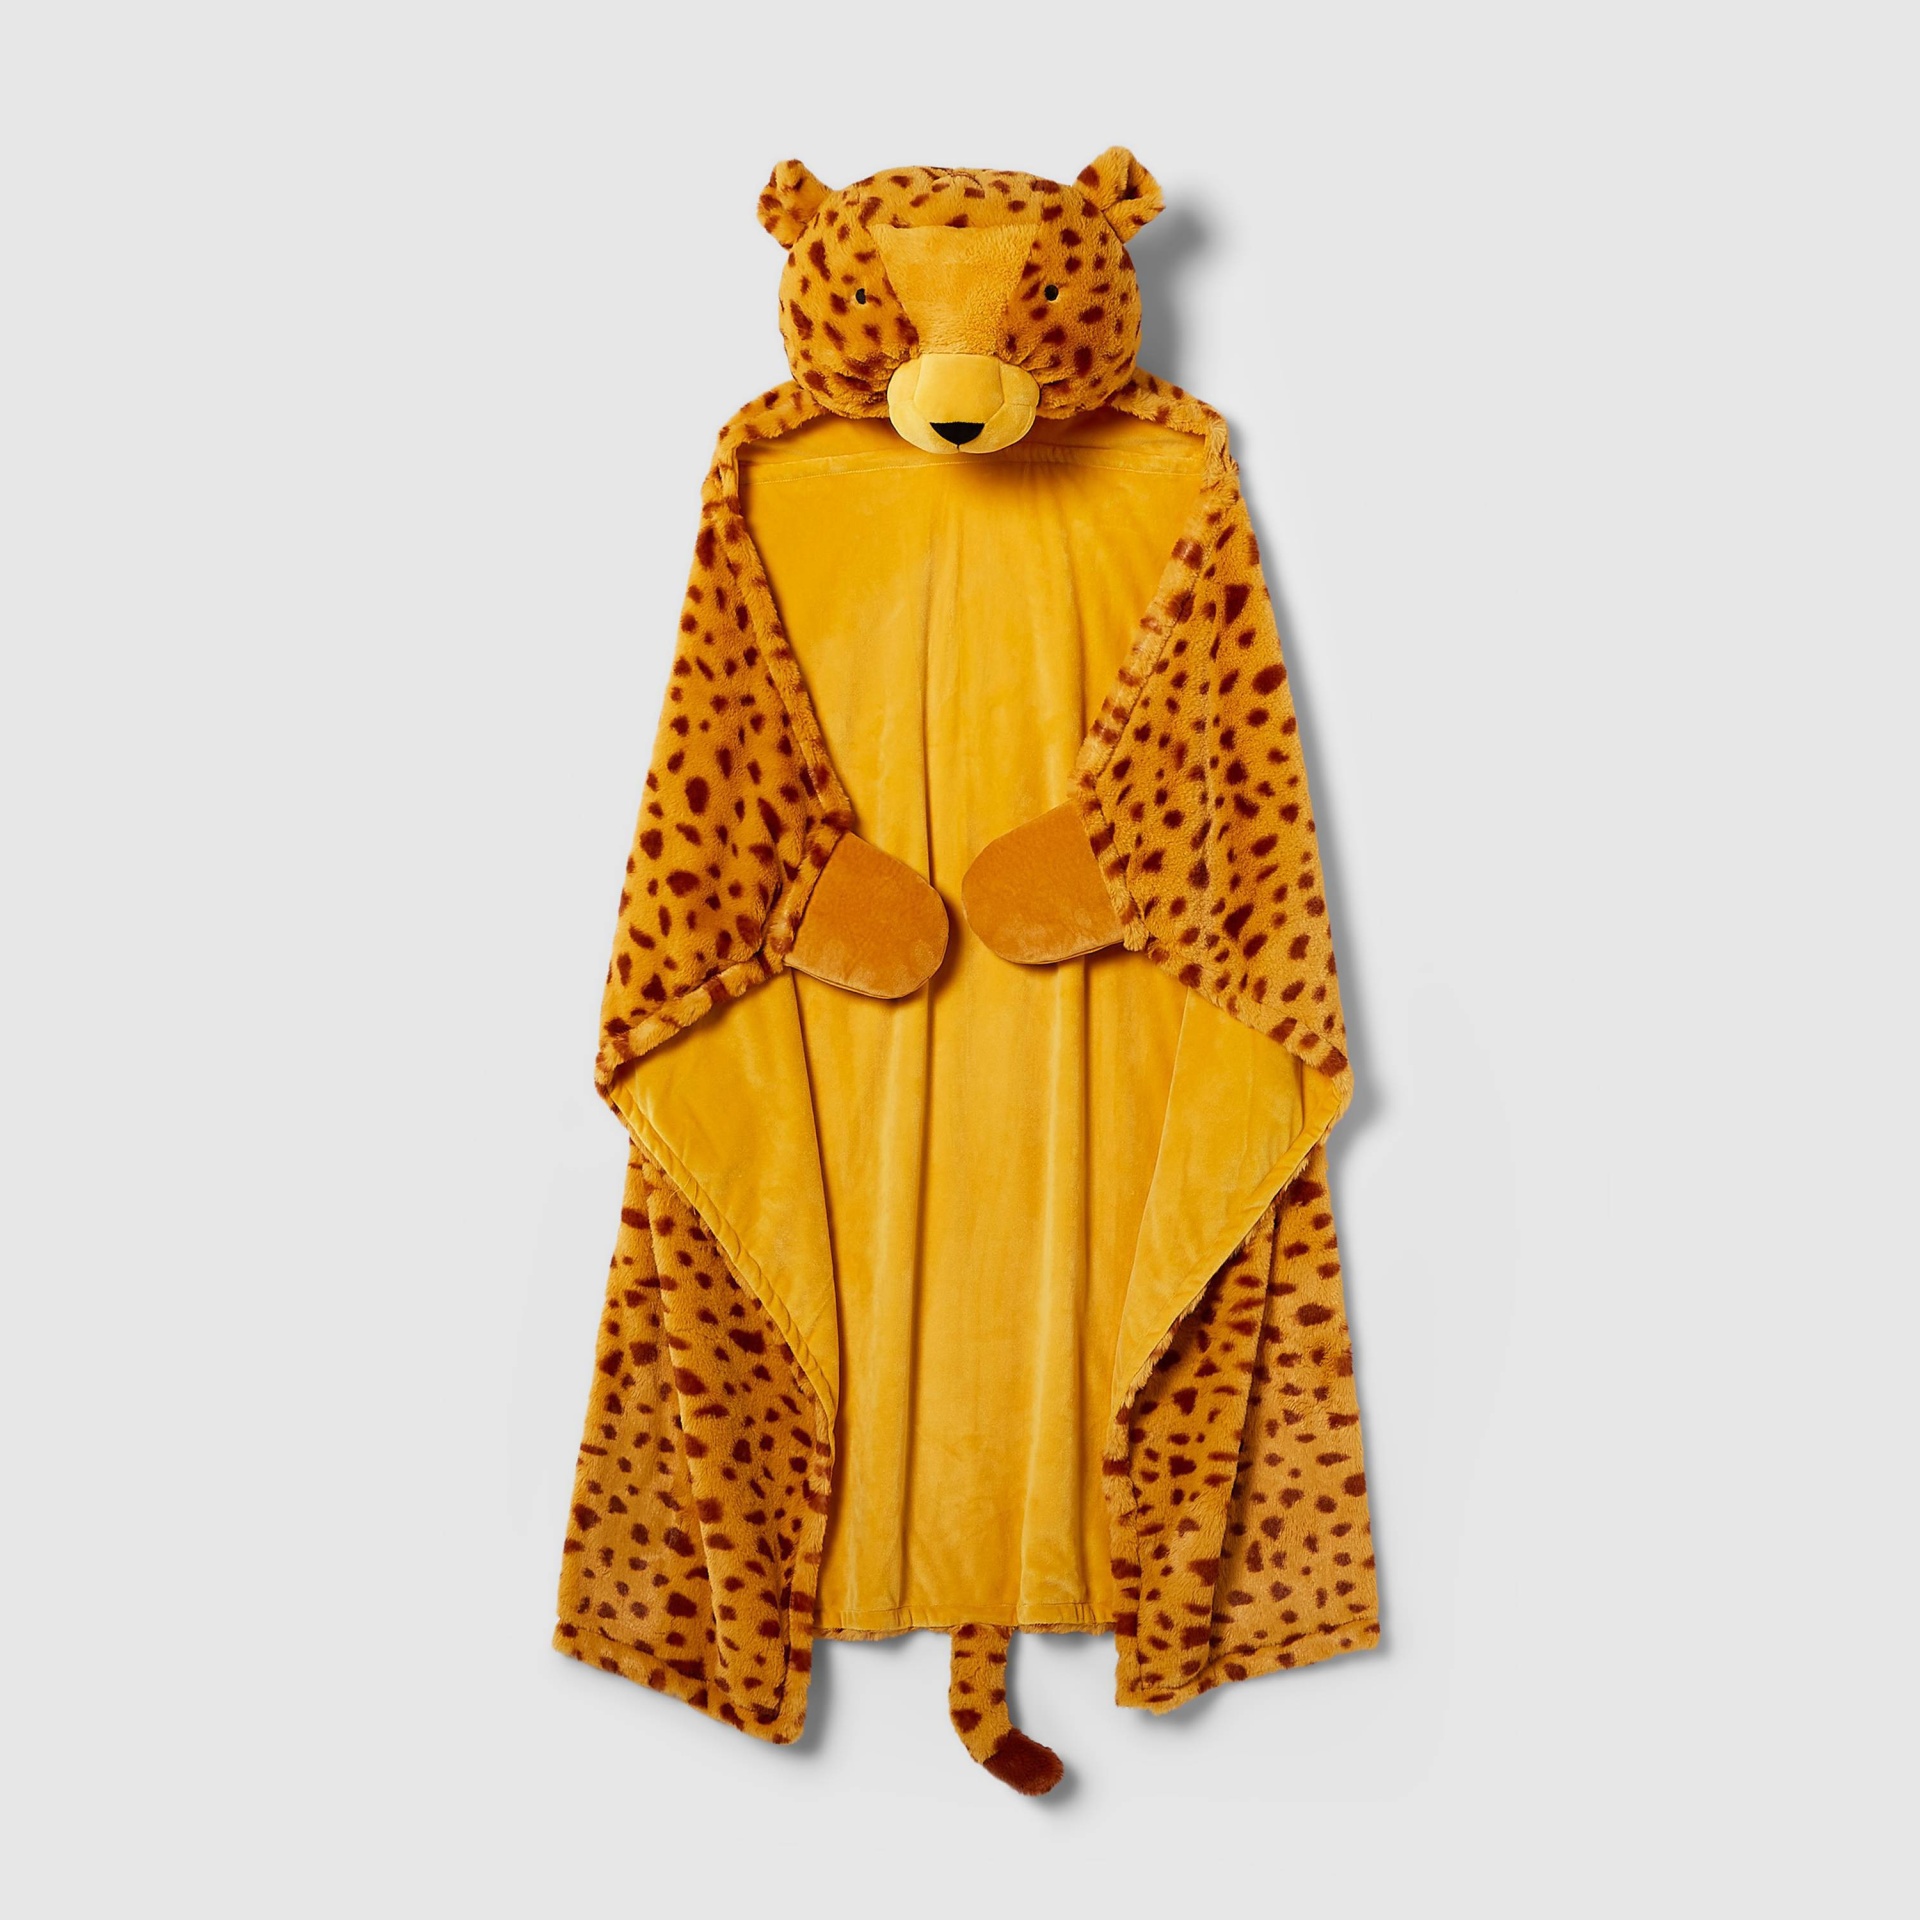 Cheetah Hooded Blanket - Pillowfort 1 ct | Shipt